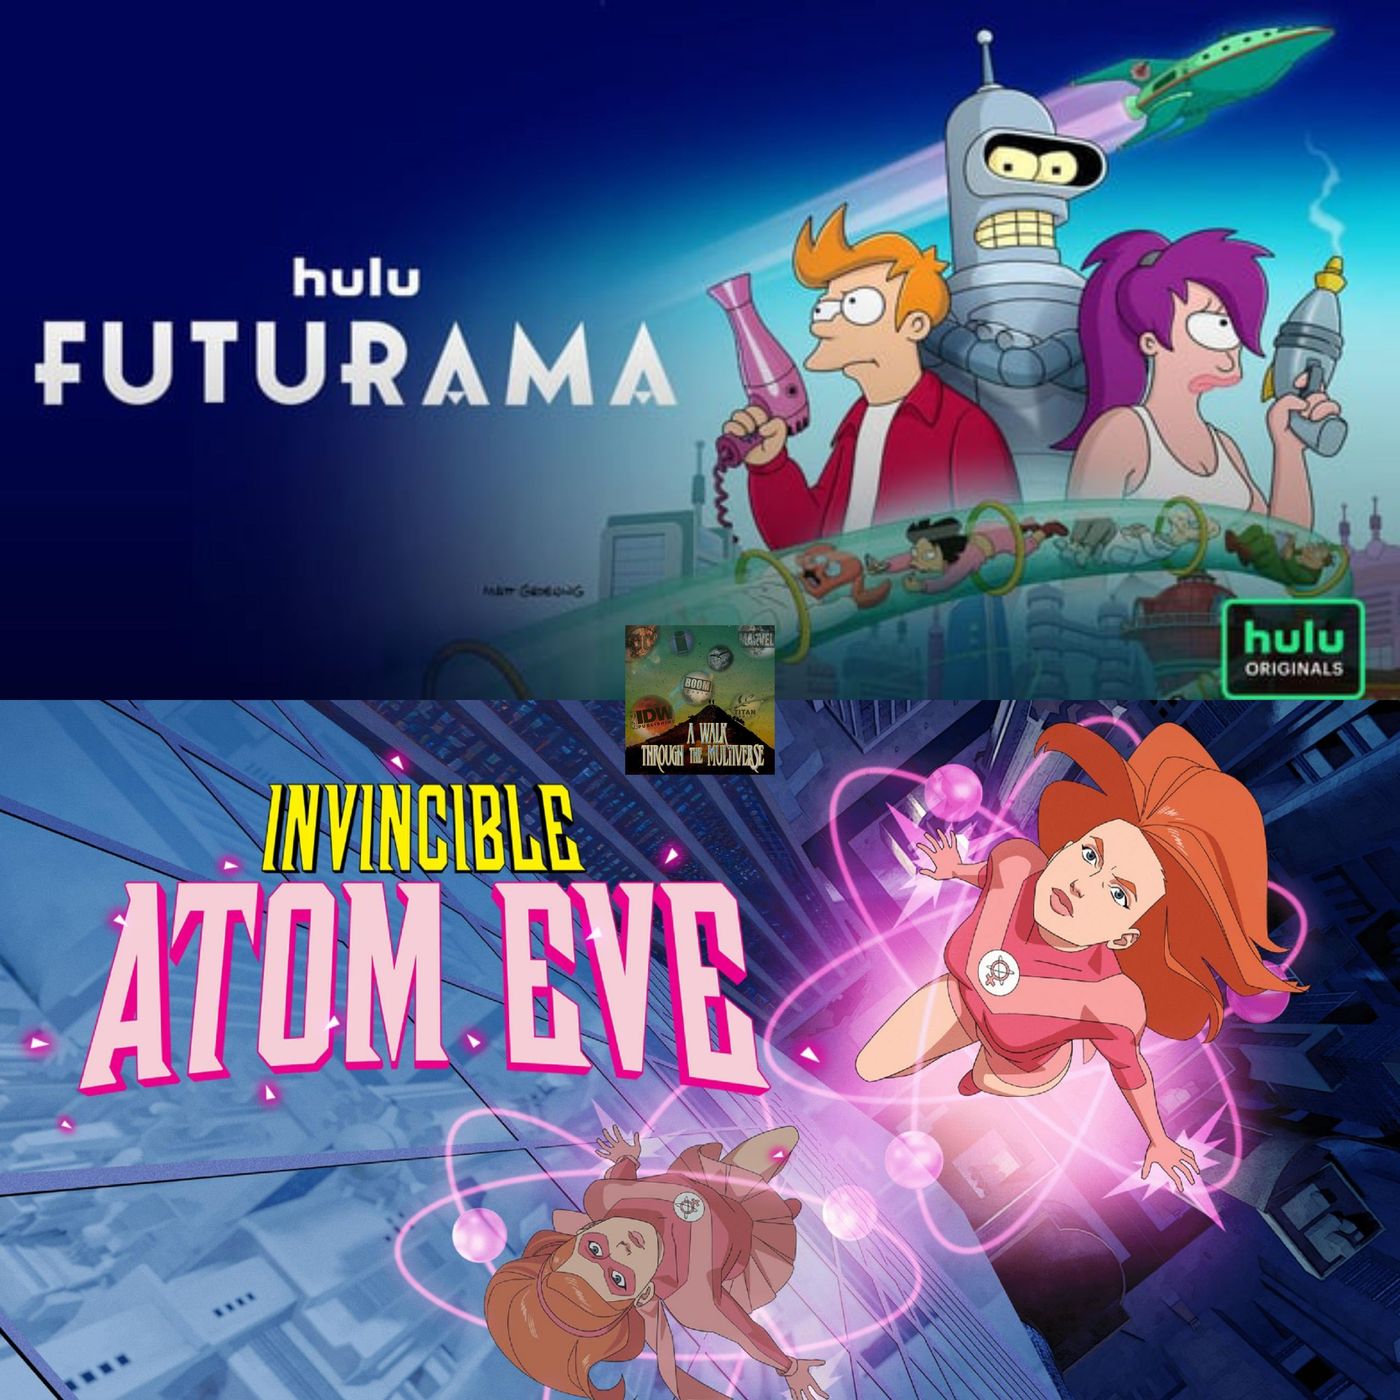 Futurama Season 11 Premiere and Invincible: Atom Eve Reviews - A Walk Through The Multiverse Episode 65